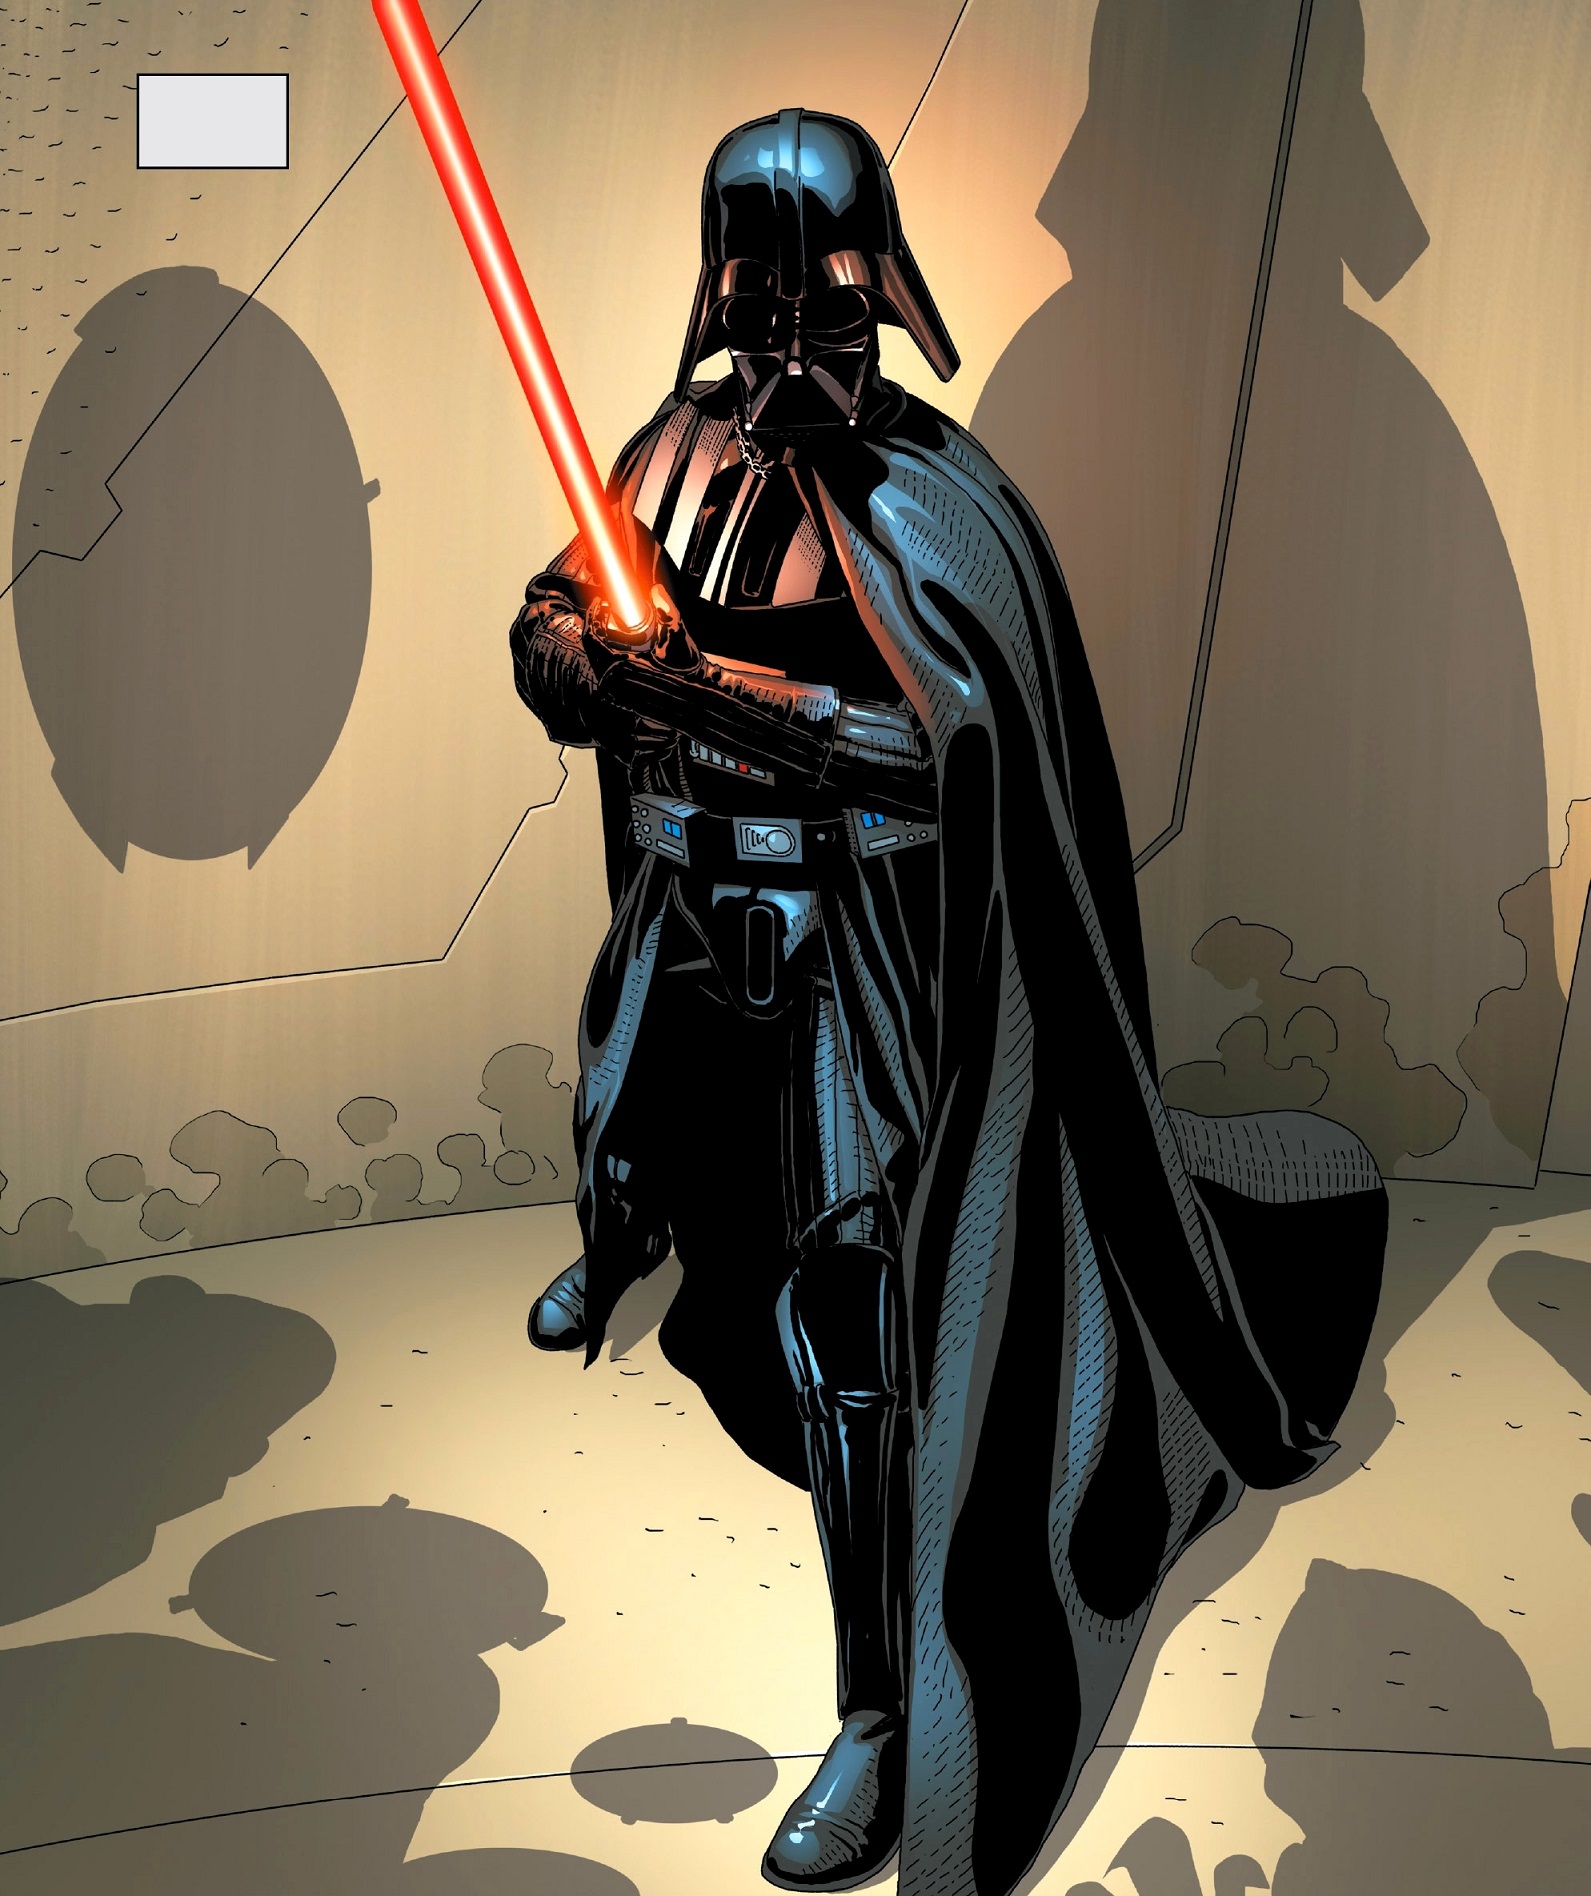 Plik:Vader gotowy do walki.jpg